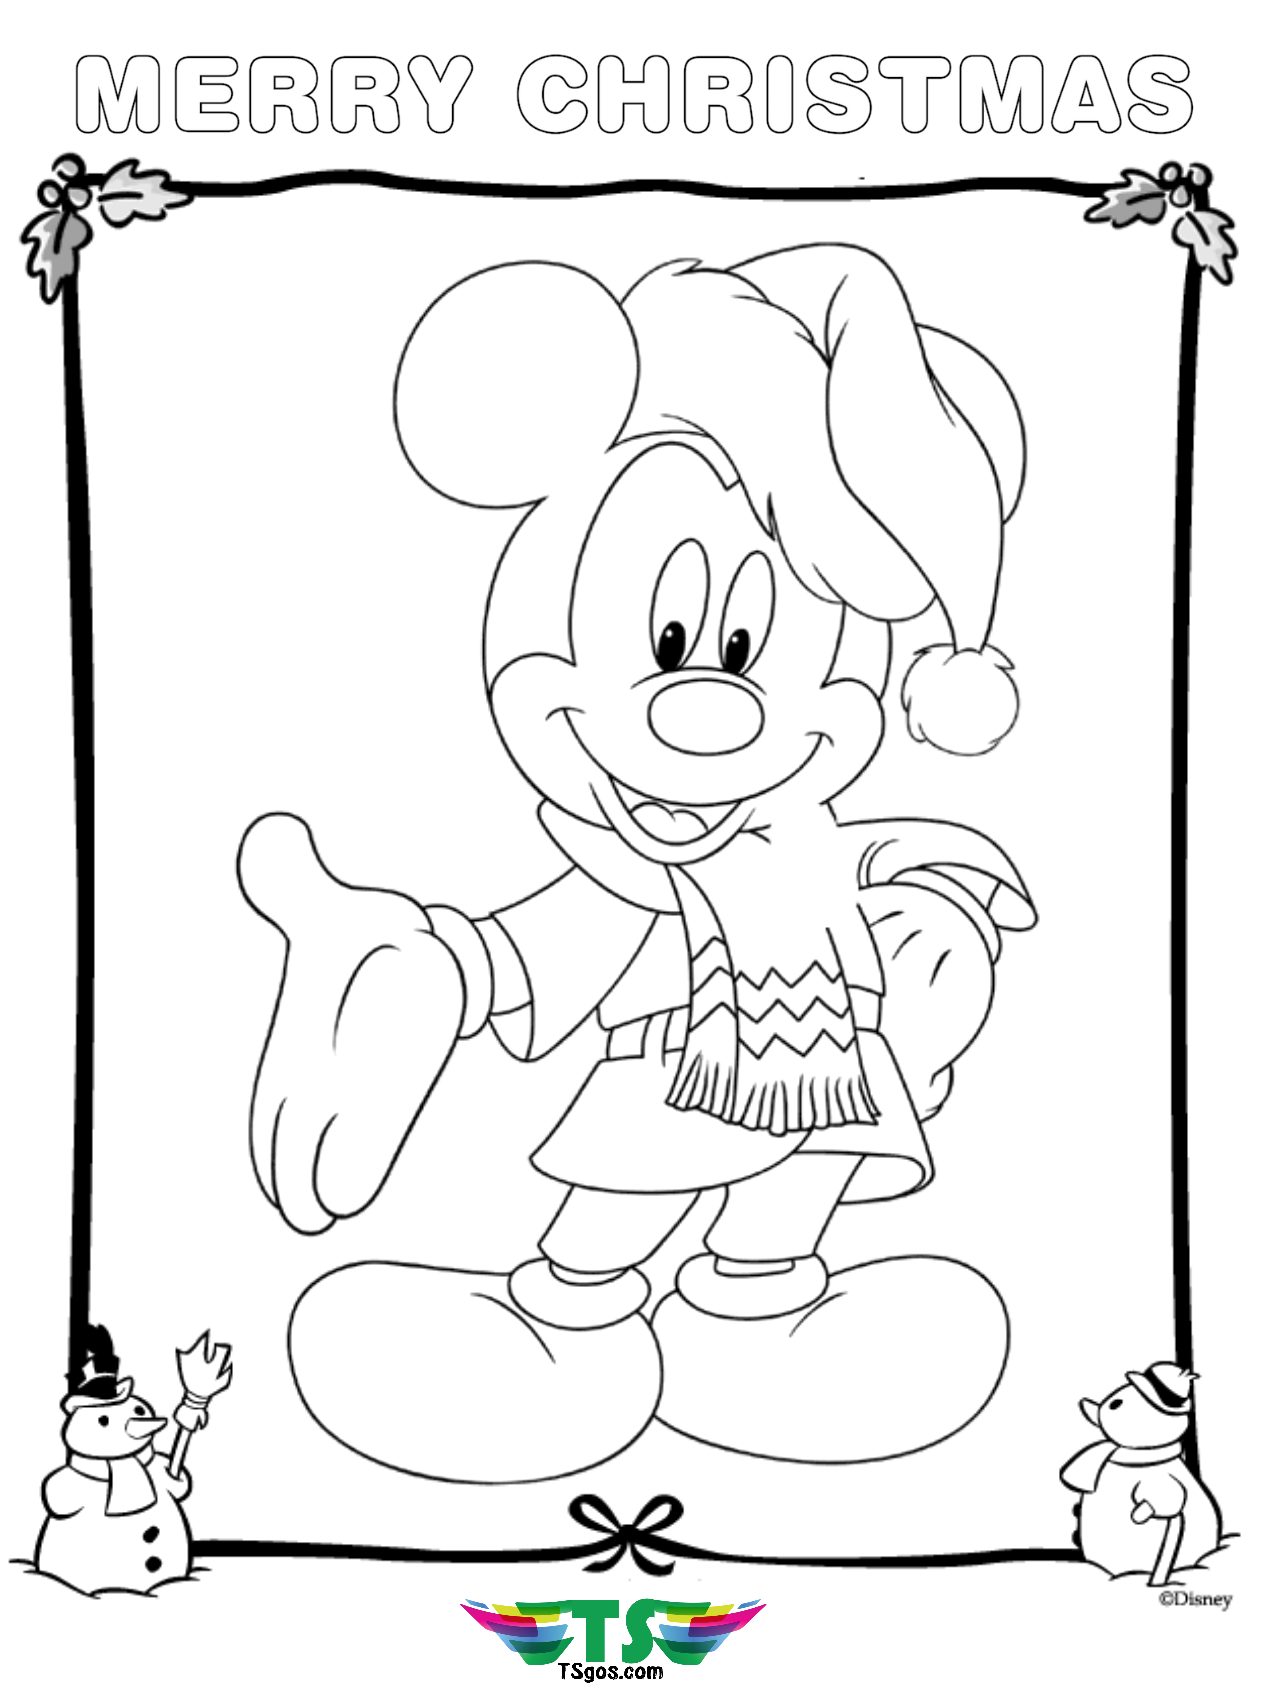 Mickey mouse merry christmas coloring page.   TSgos.com   TSgos.com